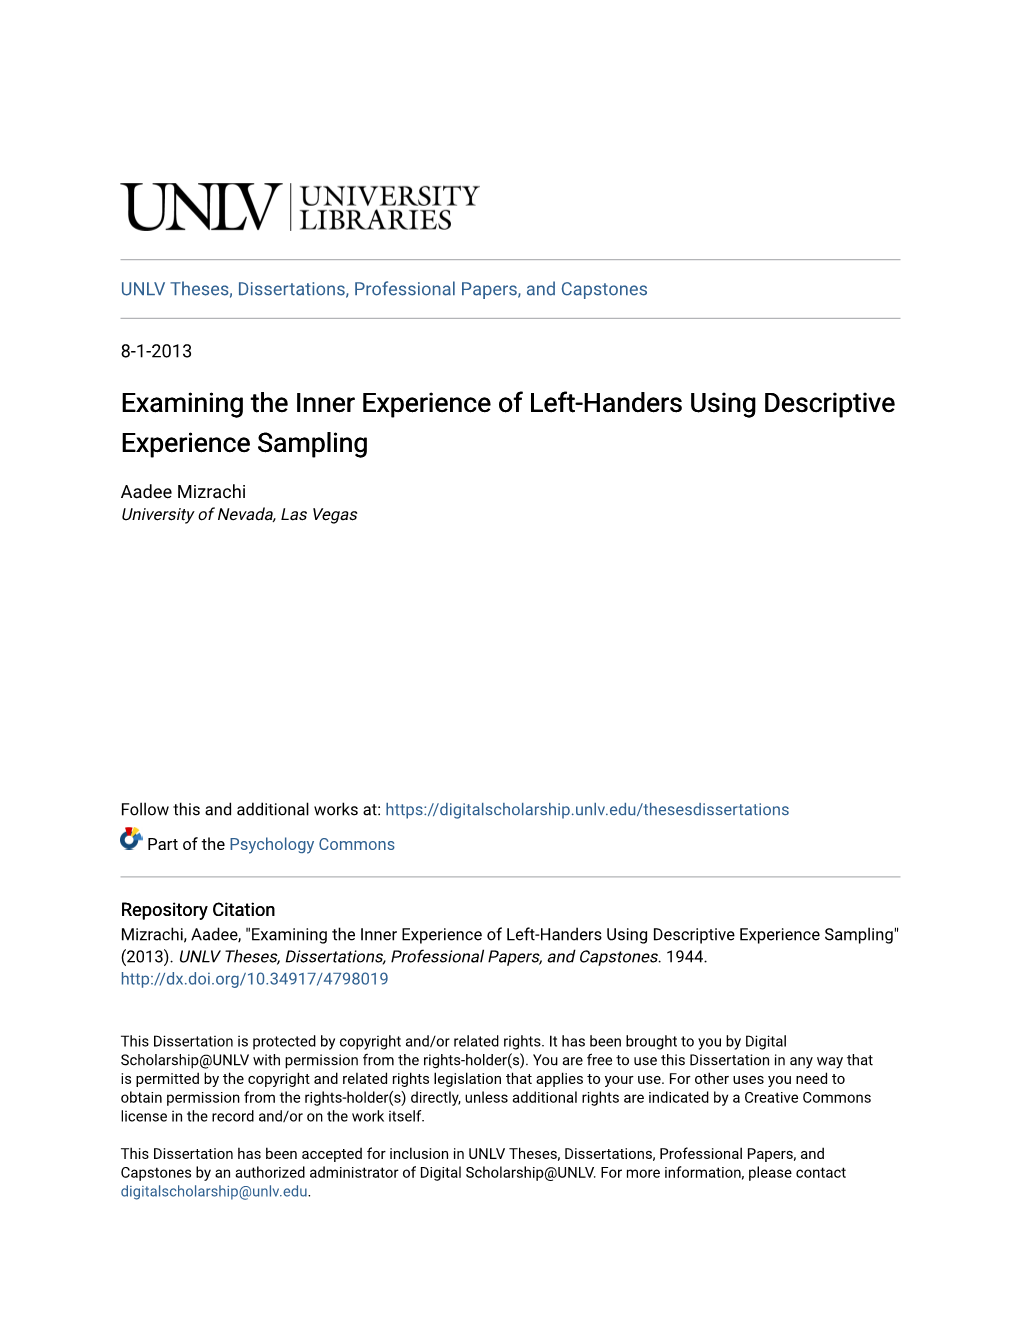 Examining the Inner Experience of Left-Handers Using Descriptive Experience Sampling